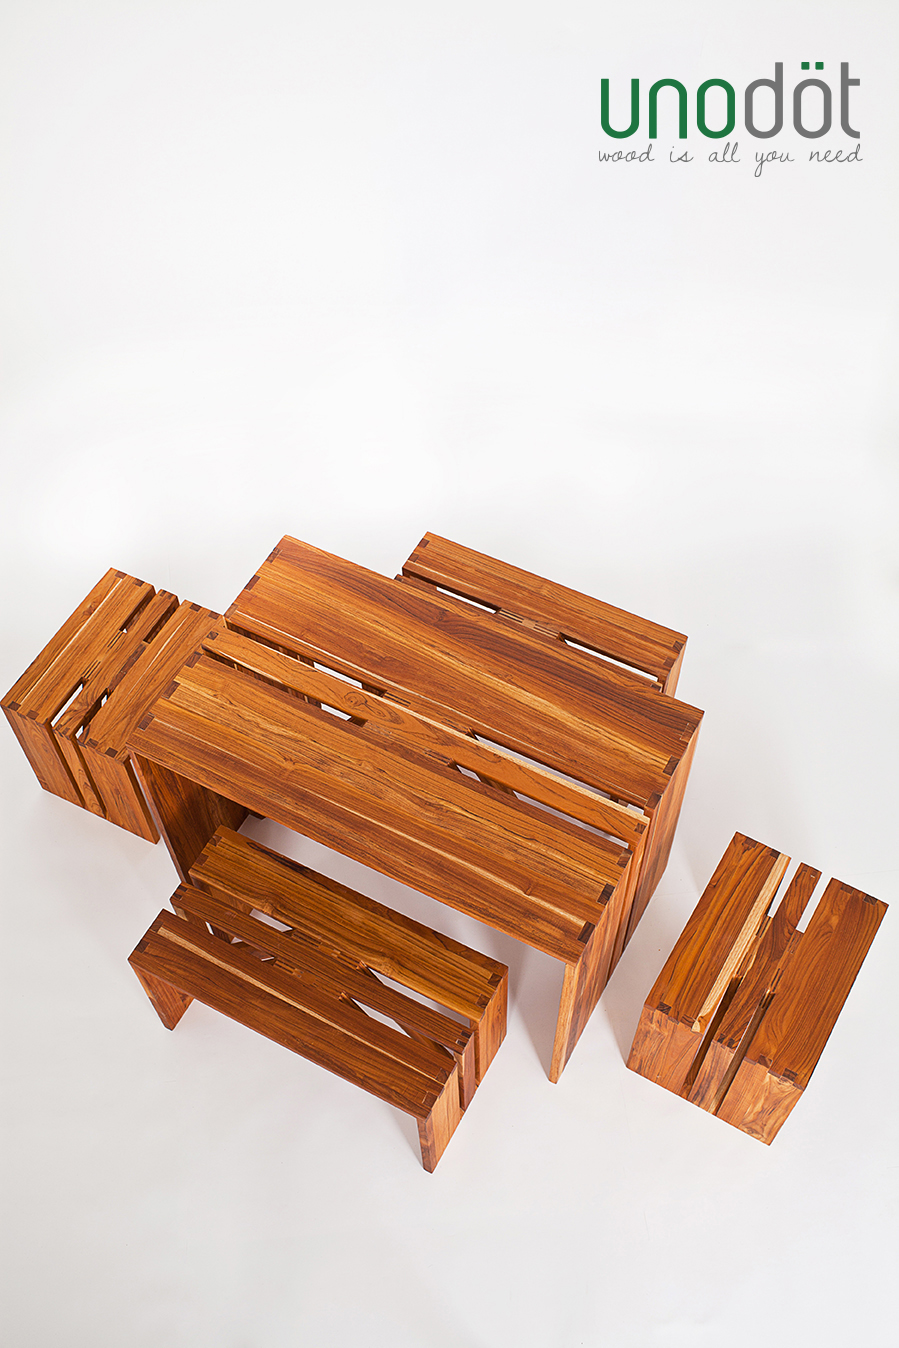 furniture design wood